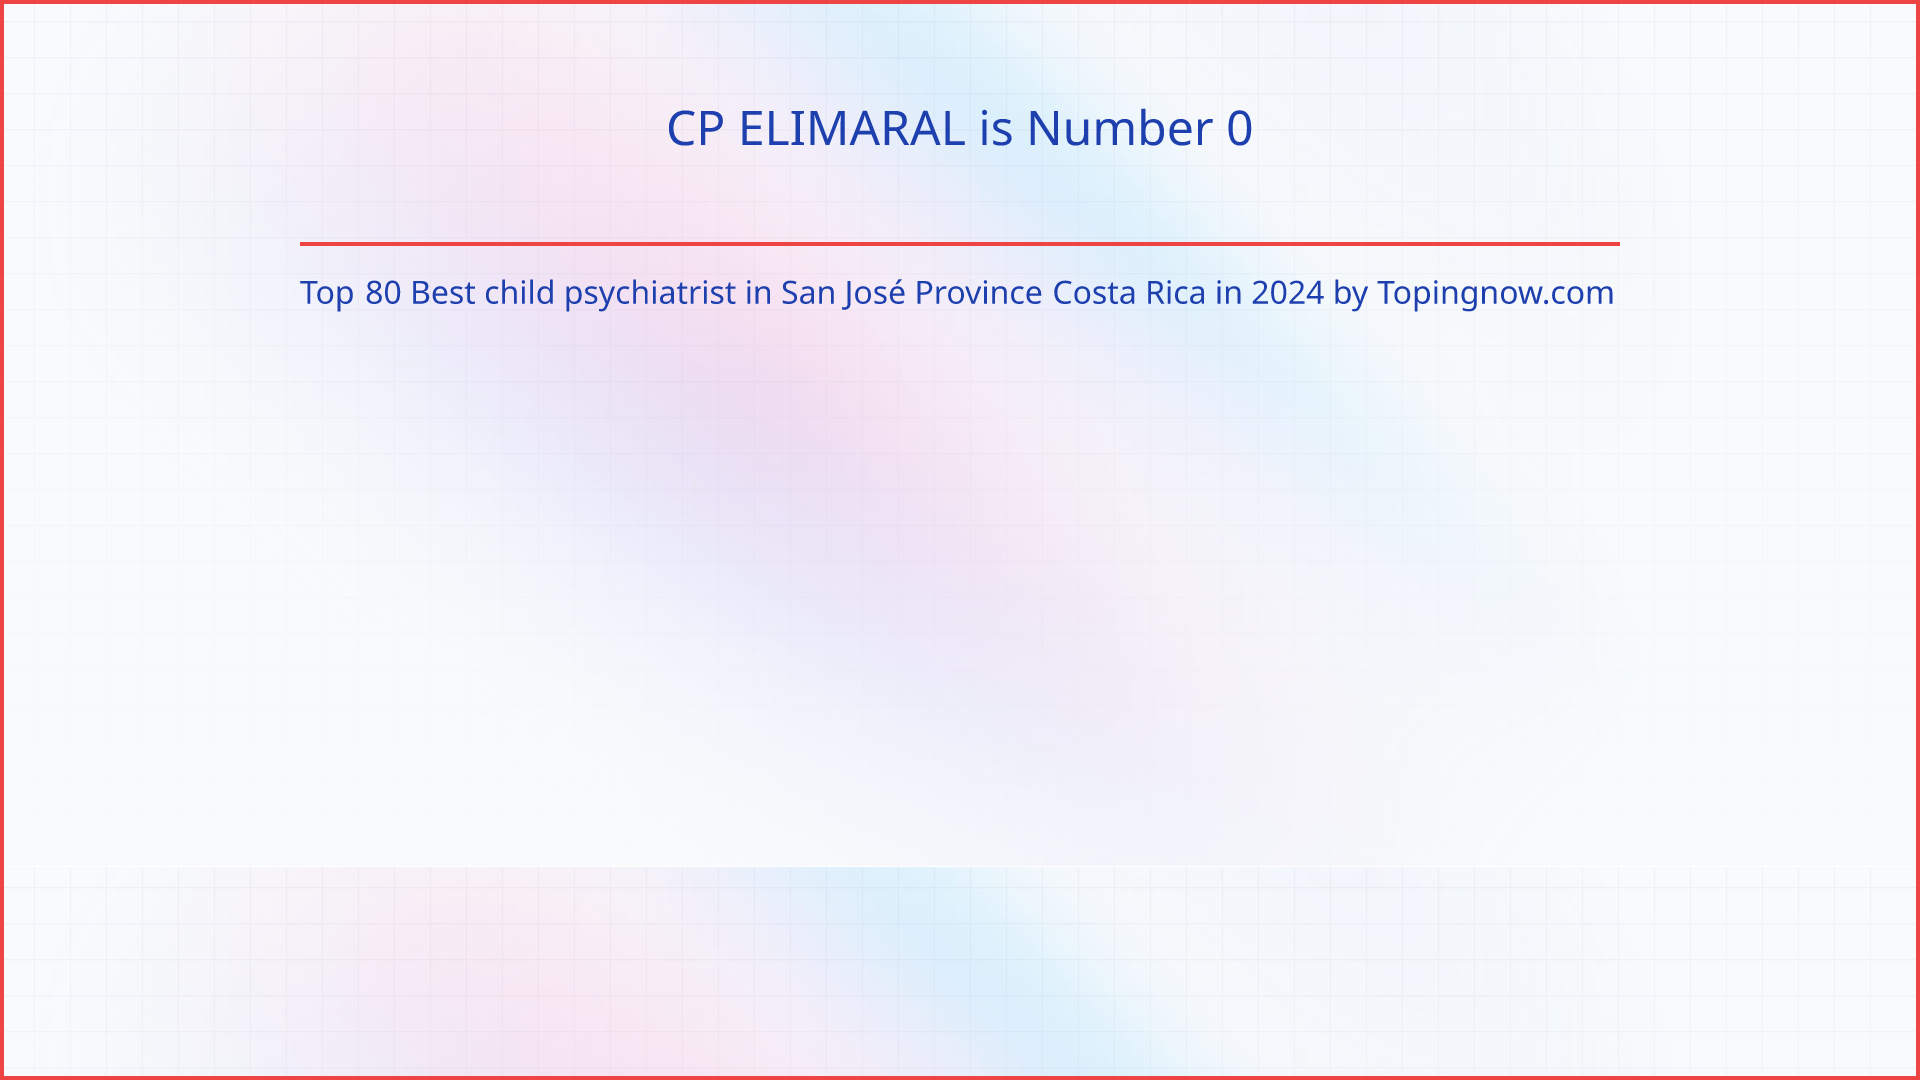 CP ELIMARAL: Top 80 Best child psychiatrist in San José Province Costa Rica in 2024